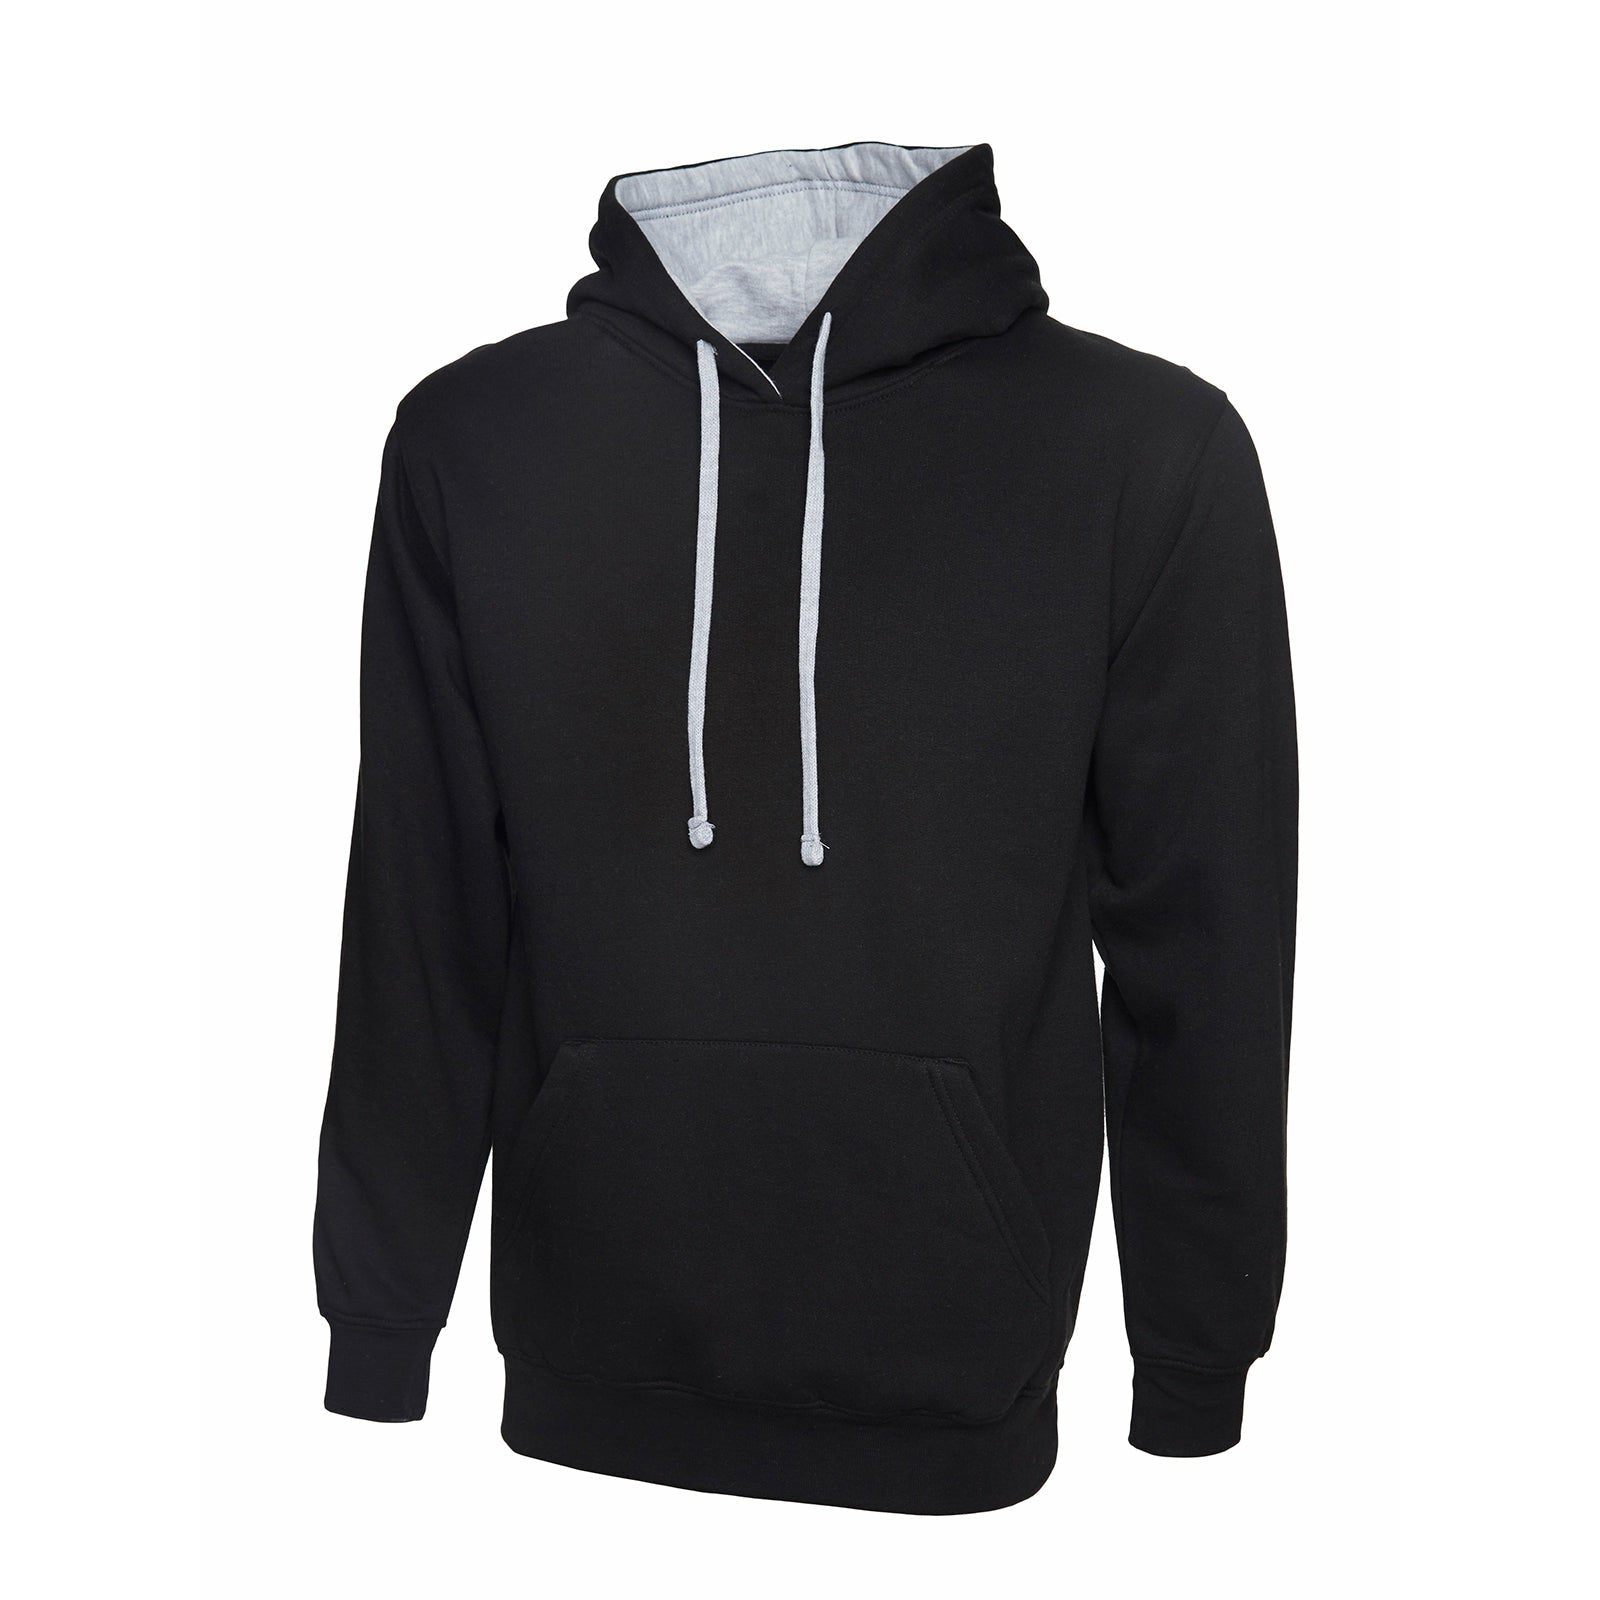 Contrast Hooded Sweatshirt Black/Grey